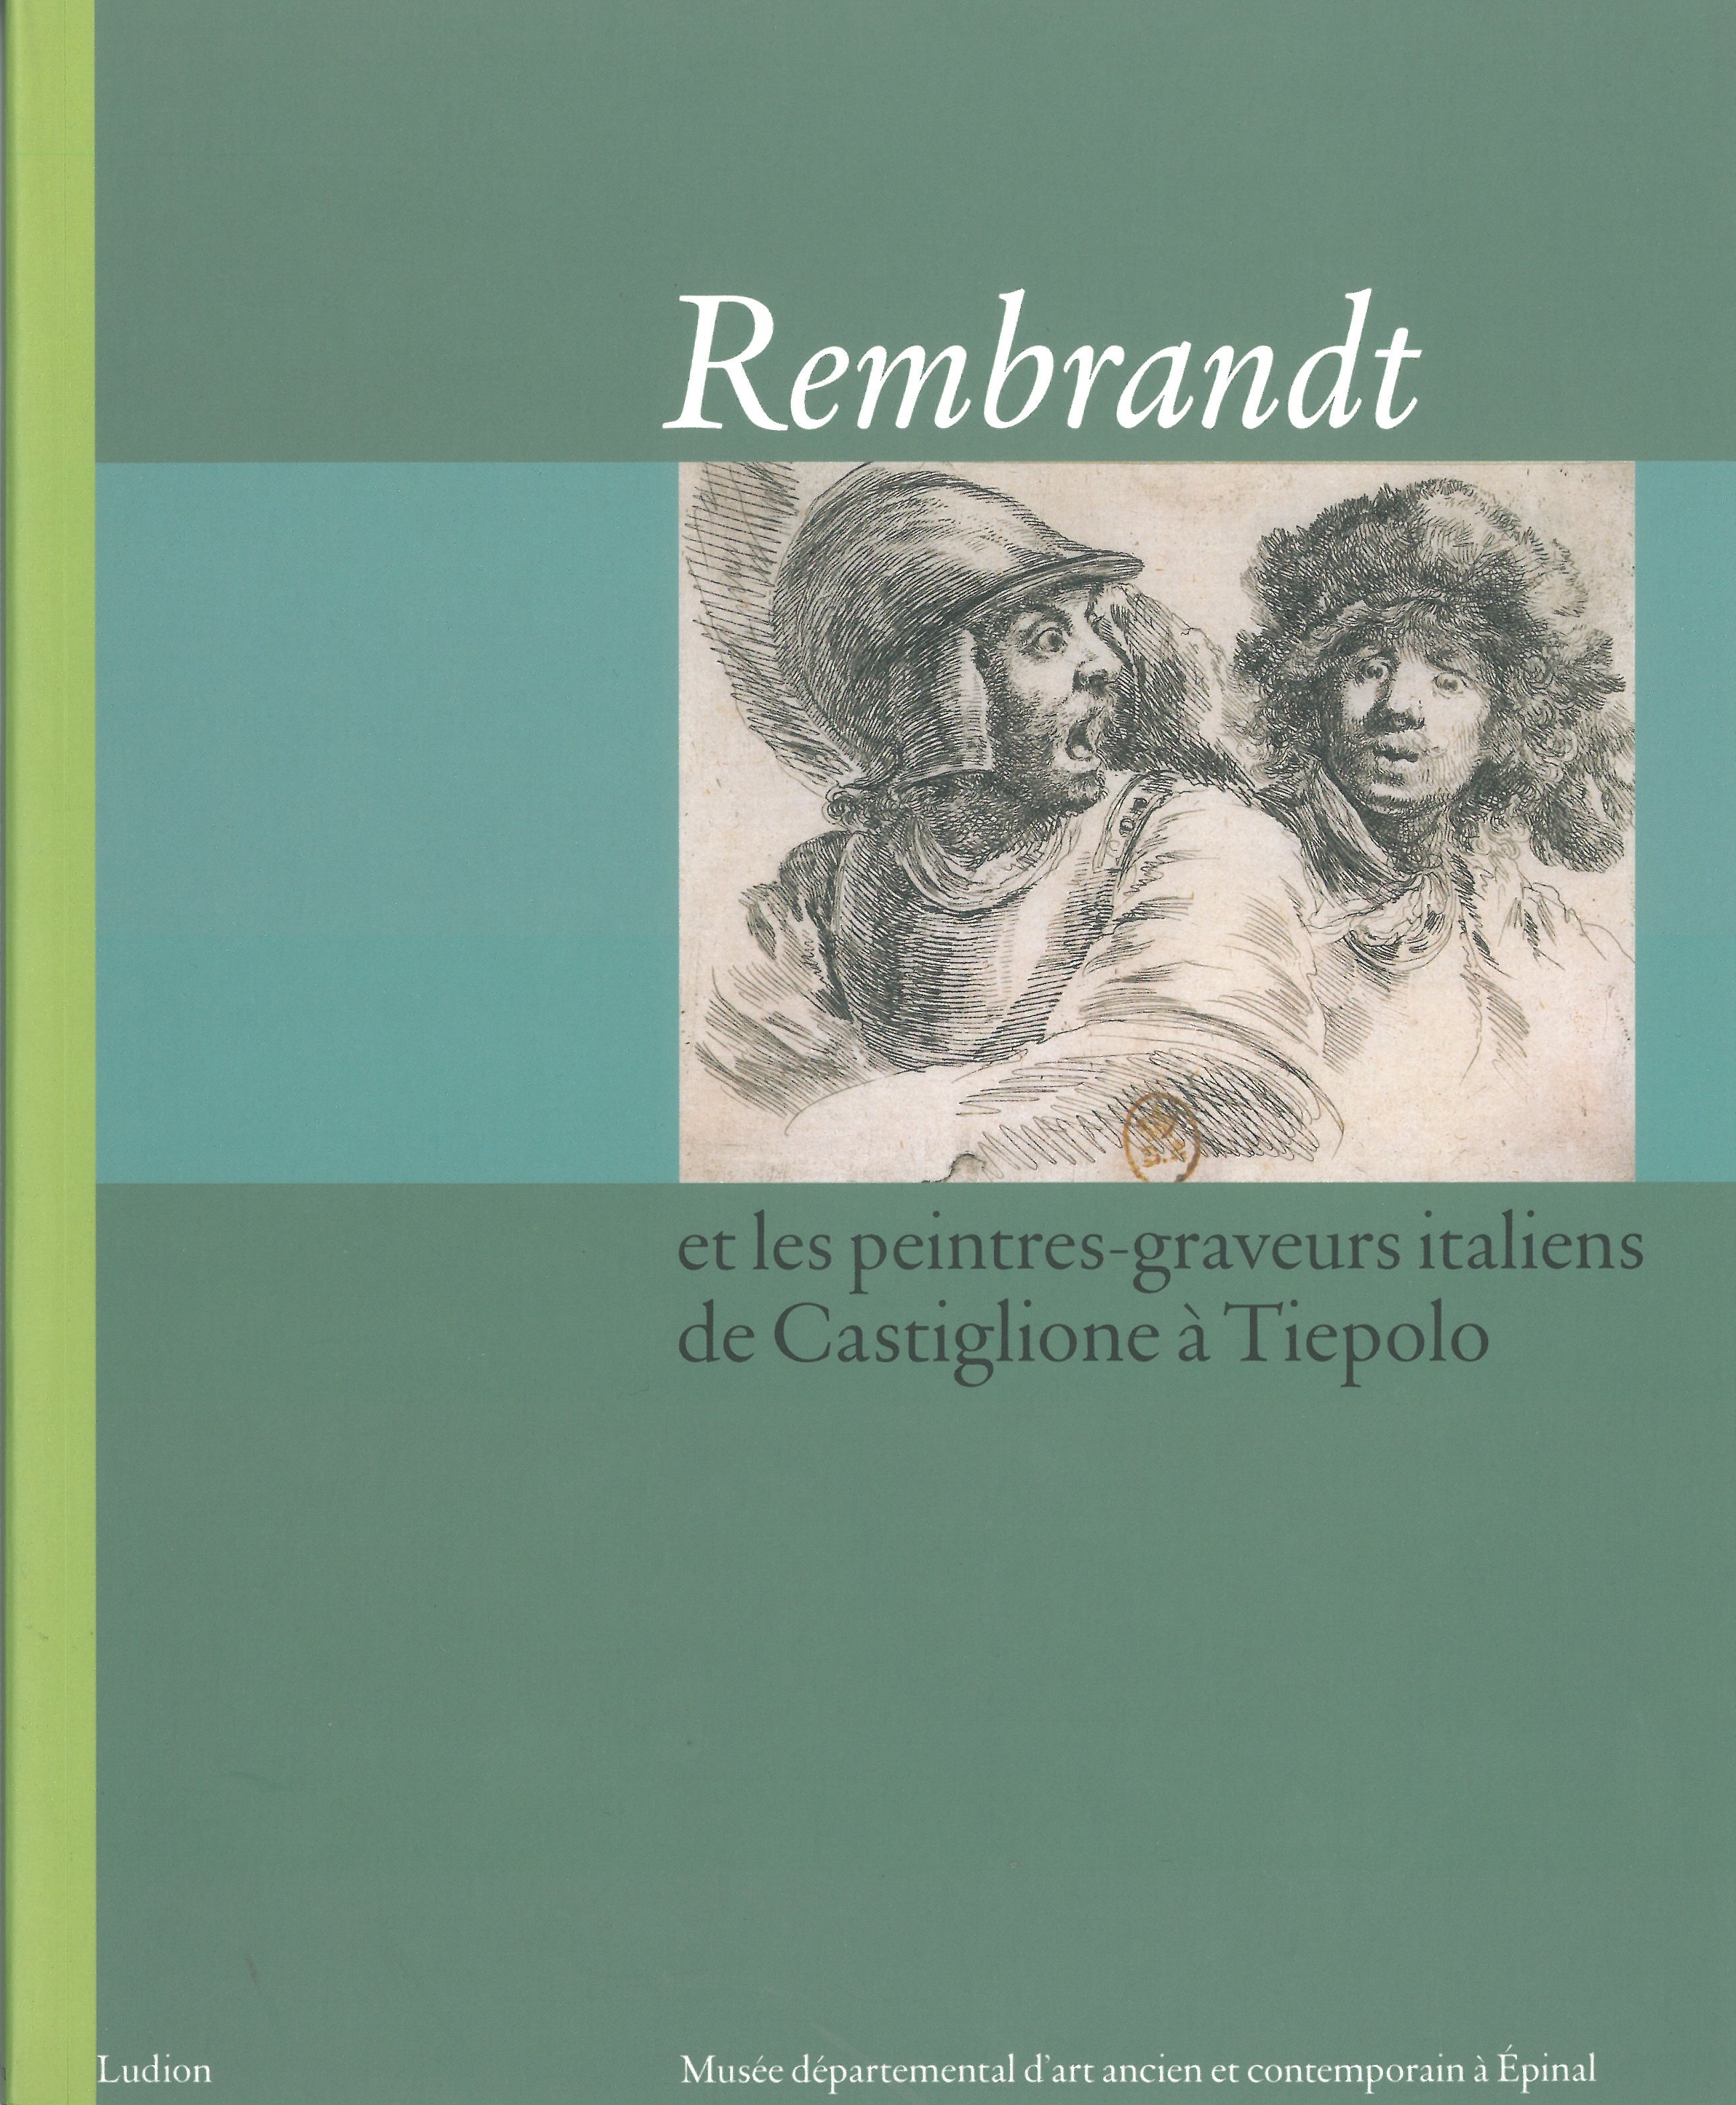 Rembrandt 2003